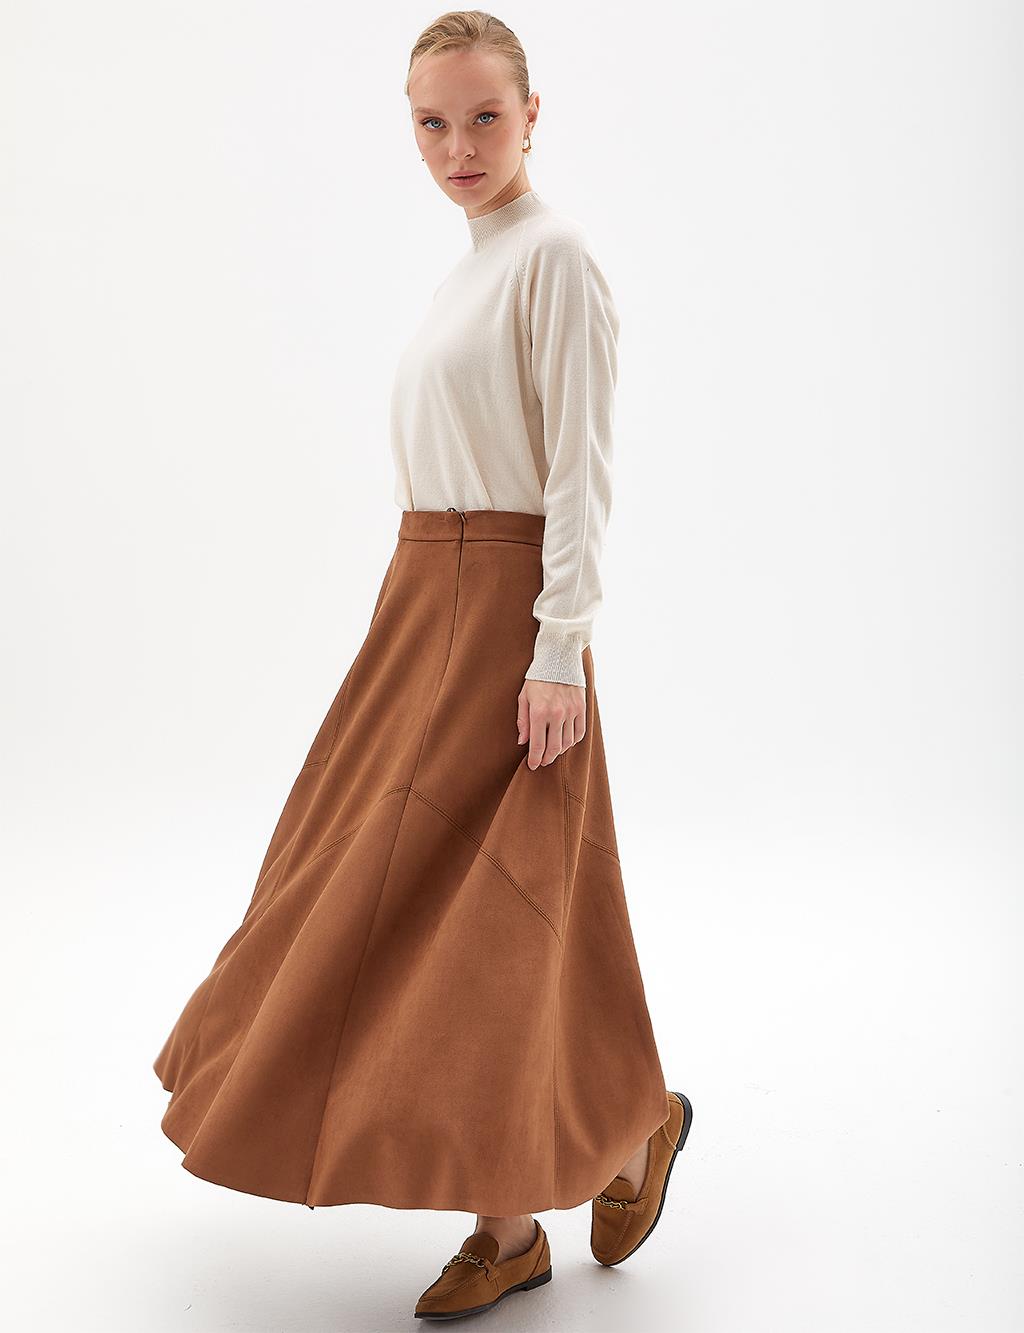 Suede A-Line Skirt Camel